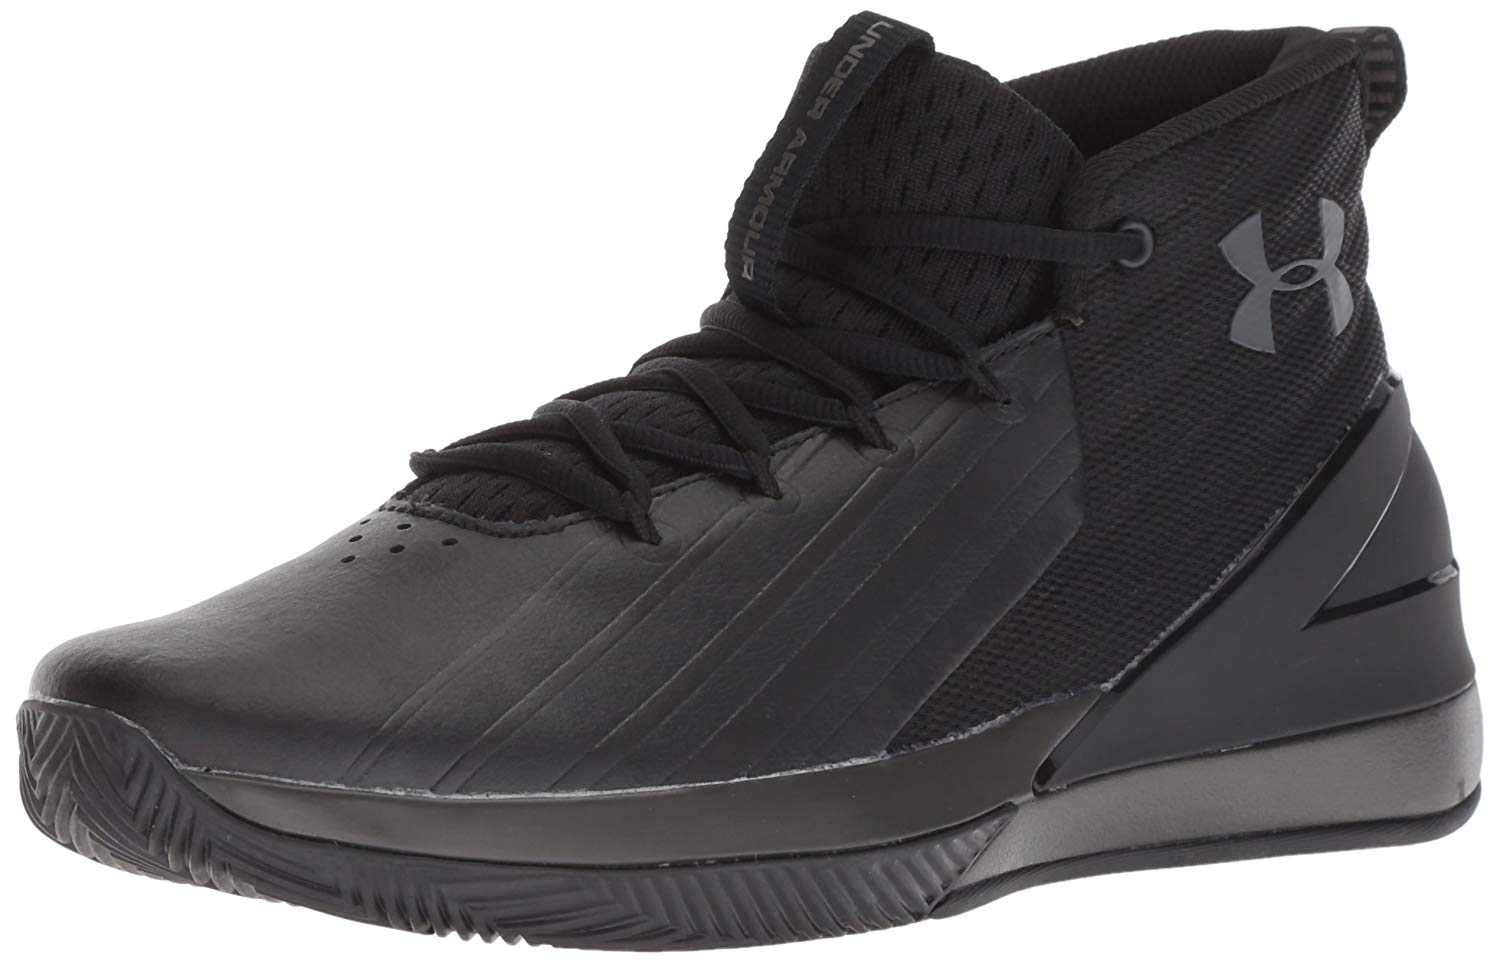 Under Armour Men's Launch Basketball Shoe, Black (001)/Charcoal, Size ...